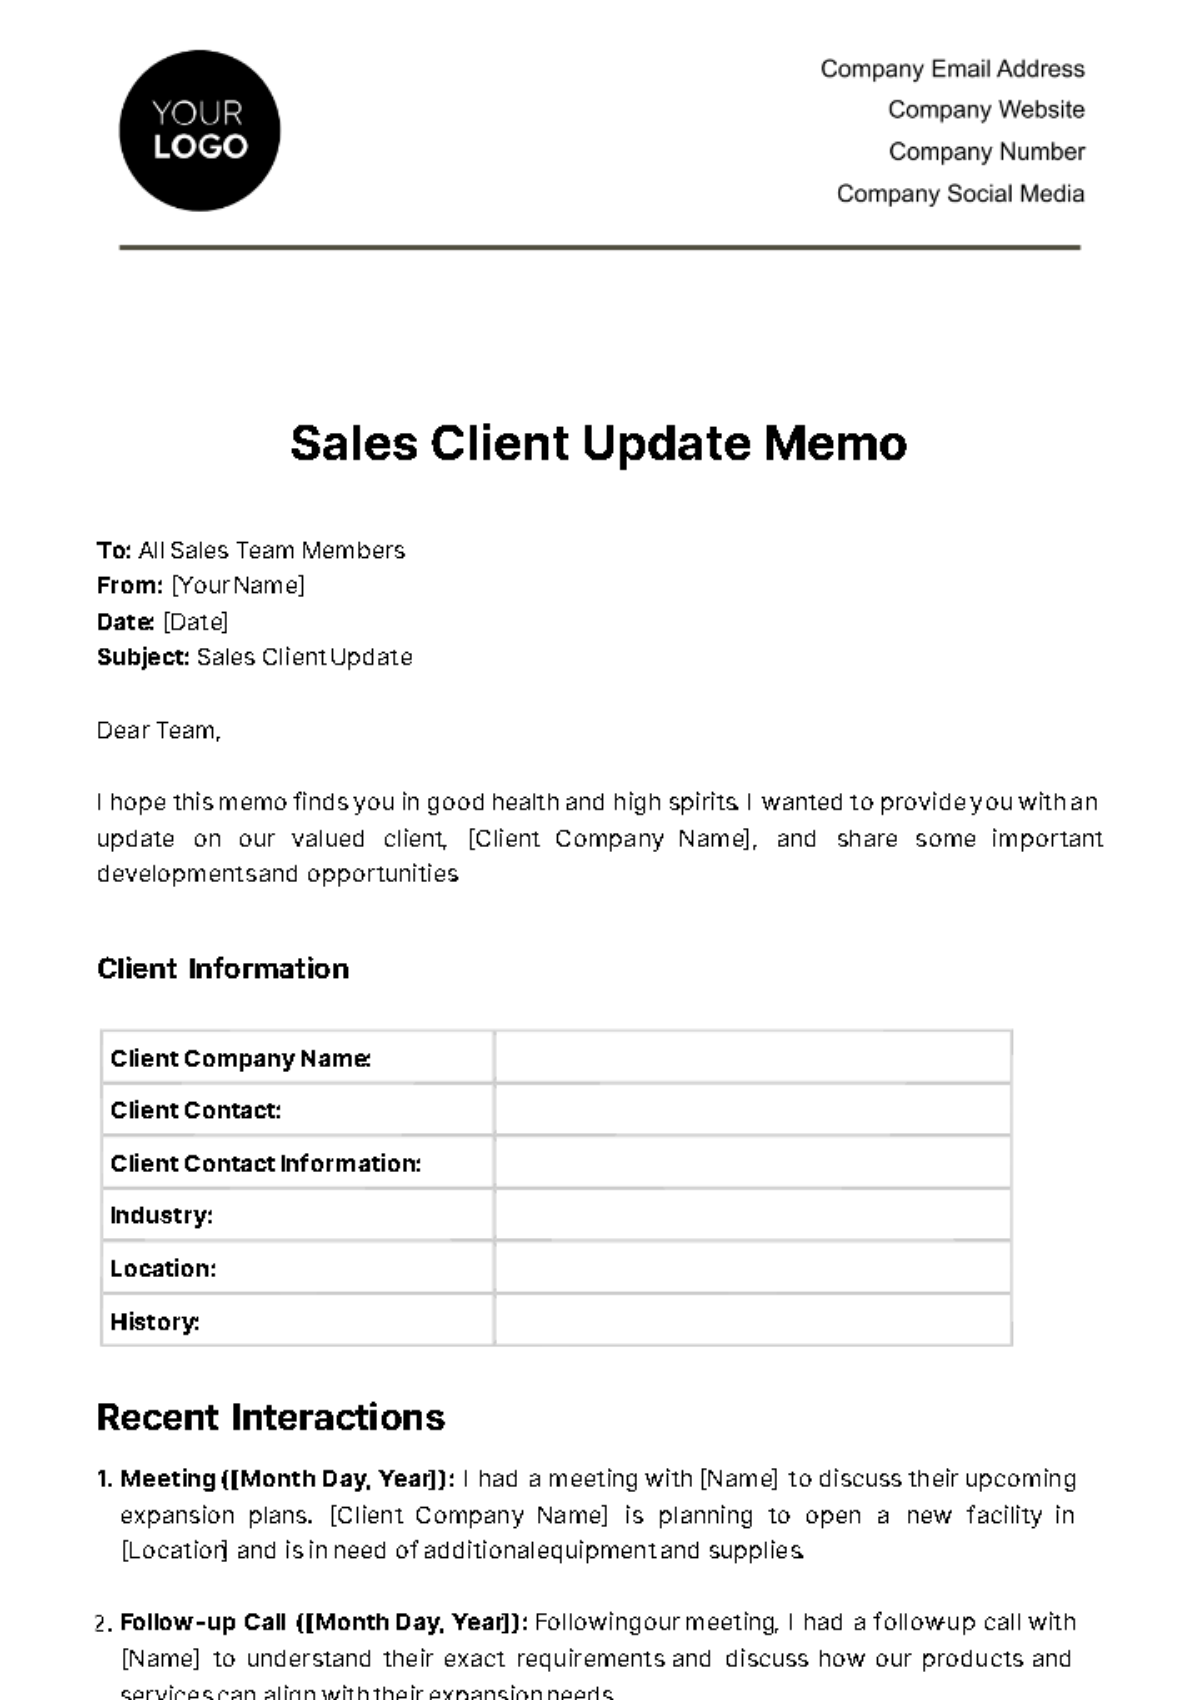 Sales Client Update Memo Template